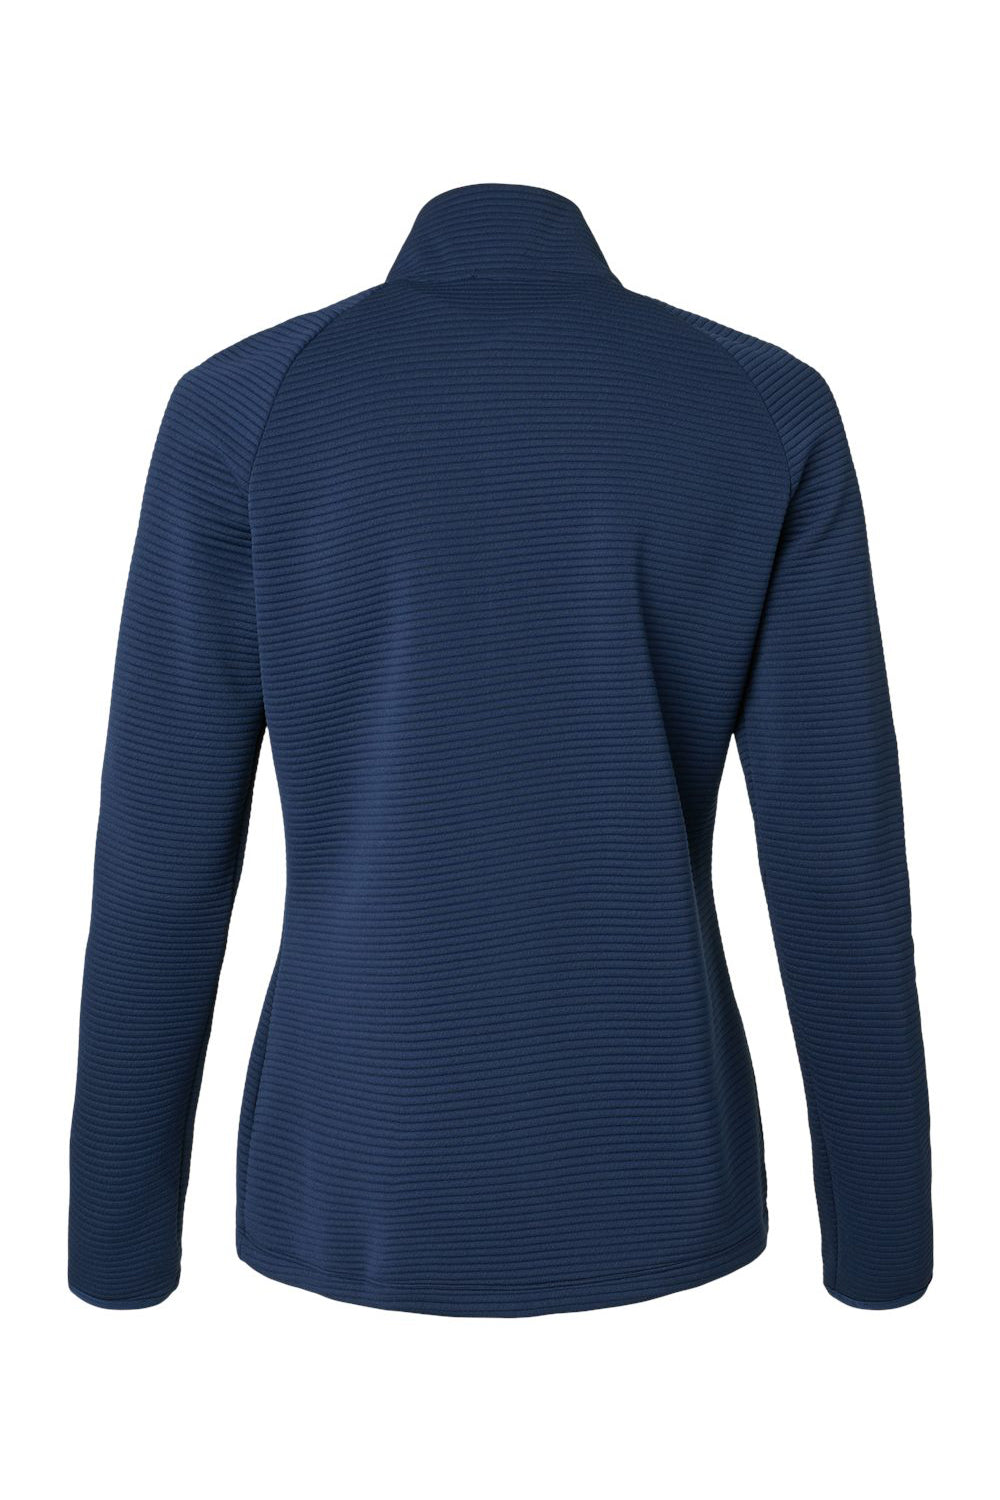 Adidas A589 Womens Spacer 1/4 Zip Sweatshirt Collegiate Navy Blue Flat Back